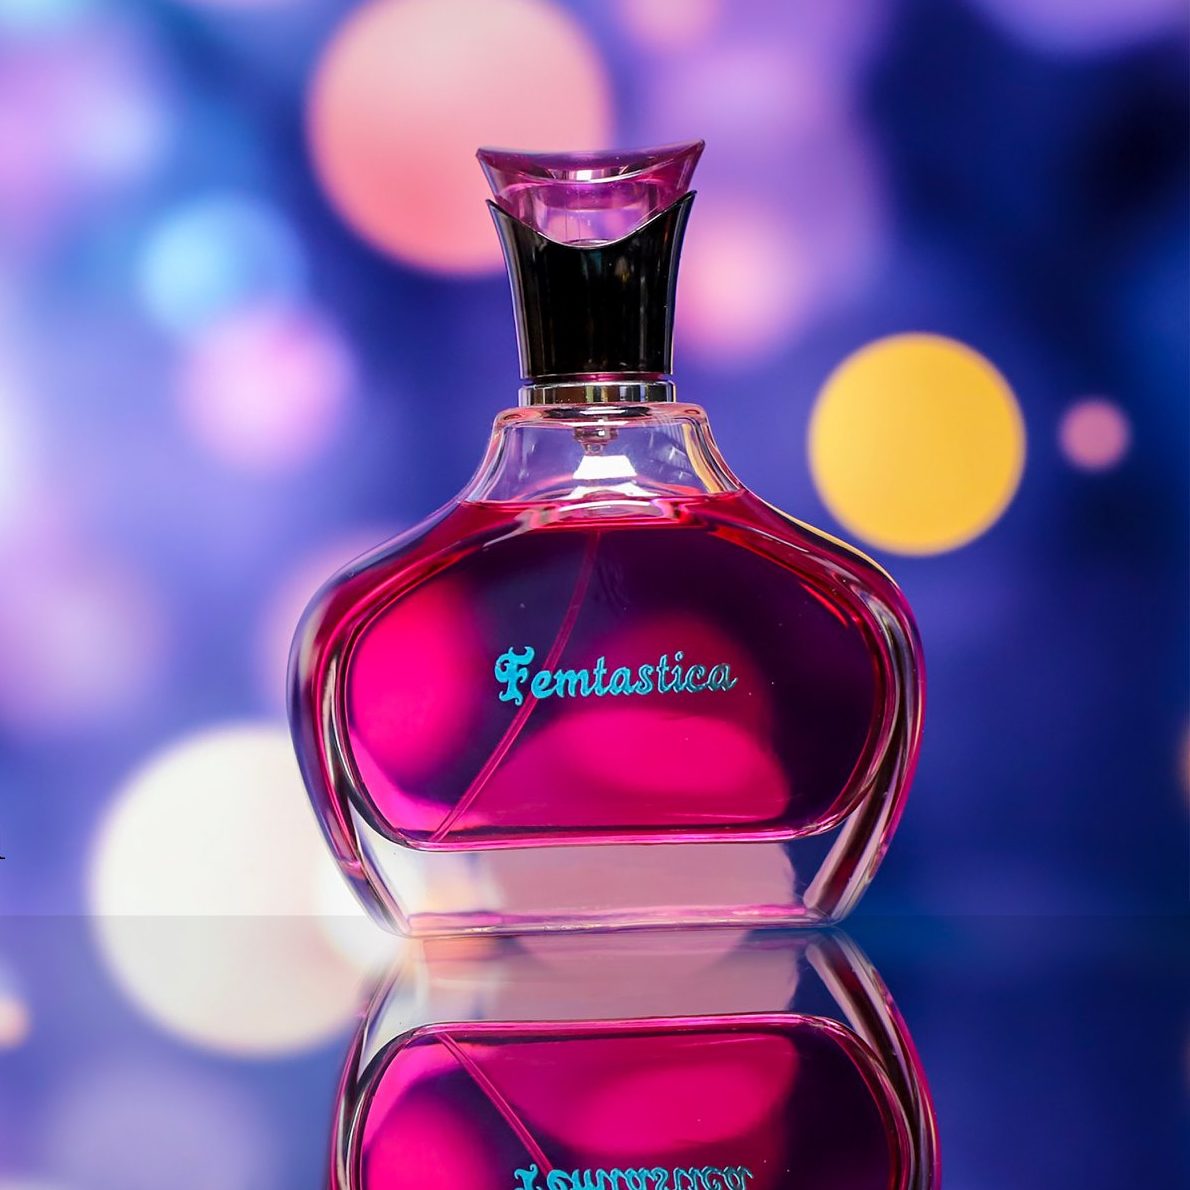 Louis Cardin – The World of Fragrances